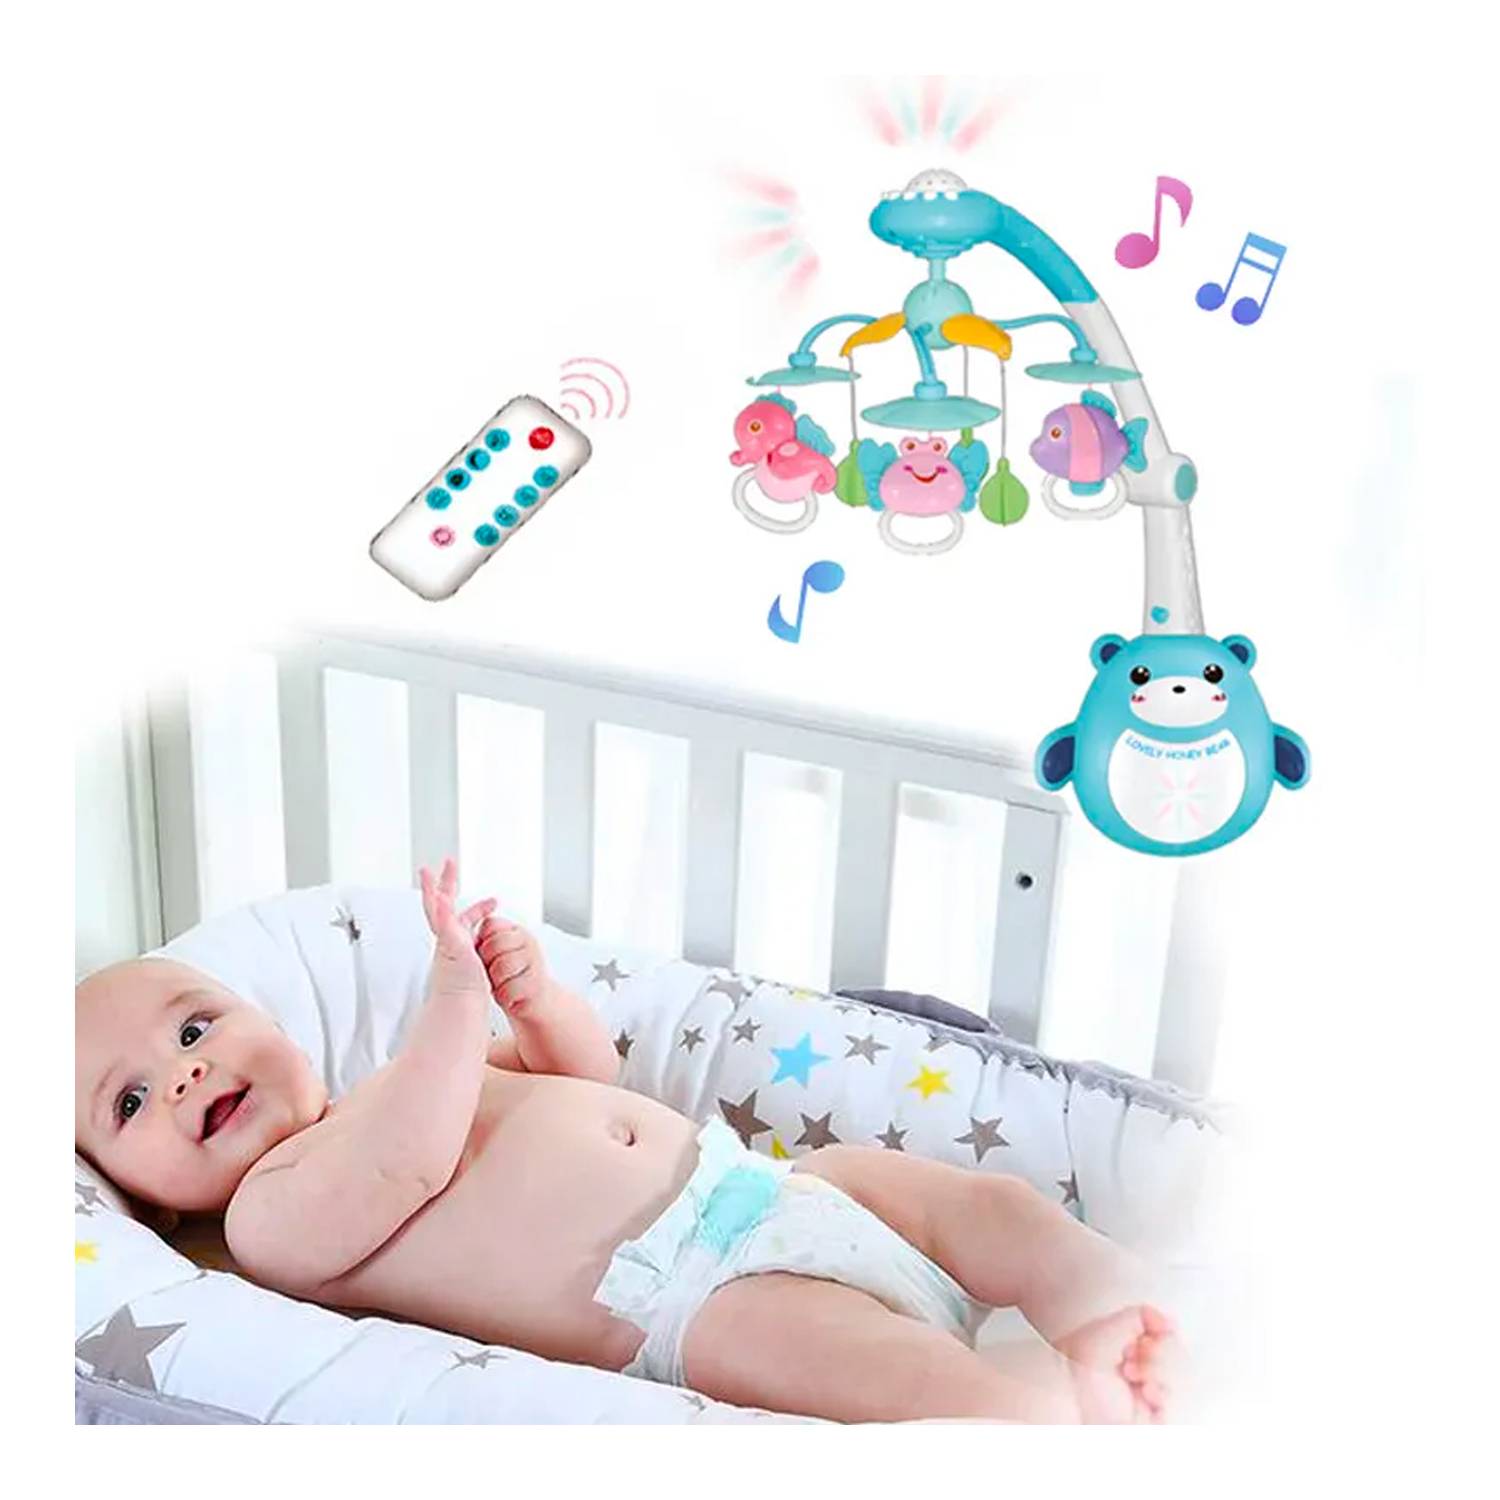 Movil Musical con Proyector para Bebes IMPORTADO